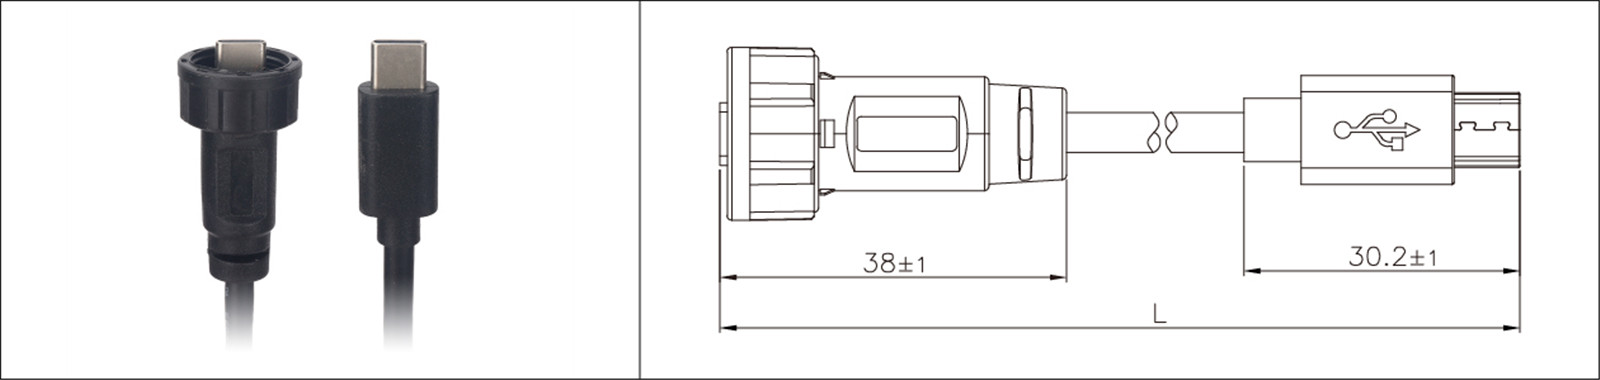 Micro USB panelmontering type 2.0 3.0 hun og han vandtæt IP67 overmold forlængerkabel industrielt stik-02 (7)